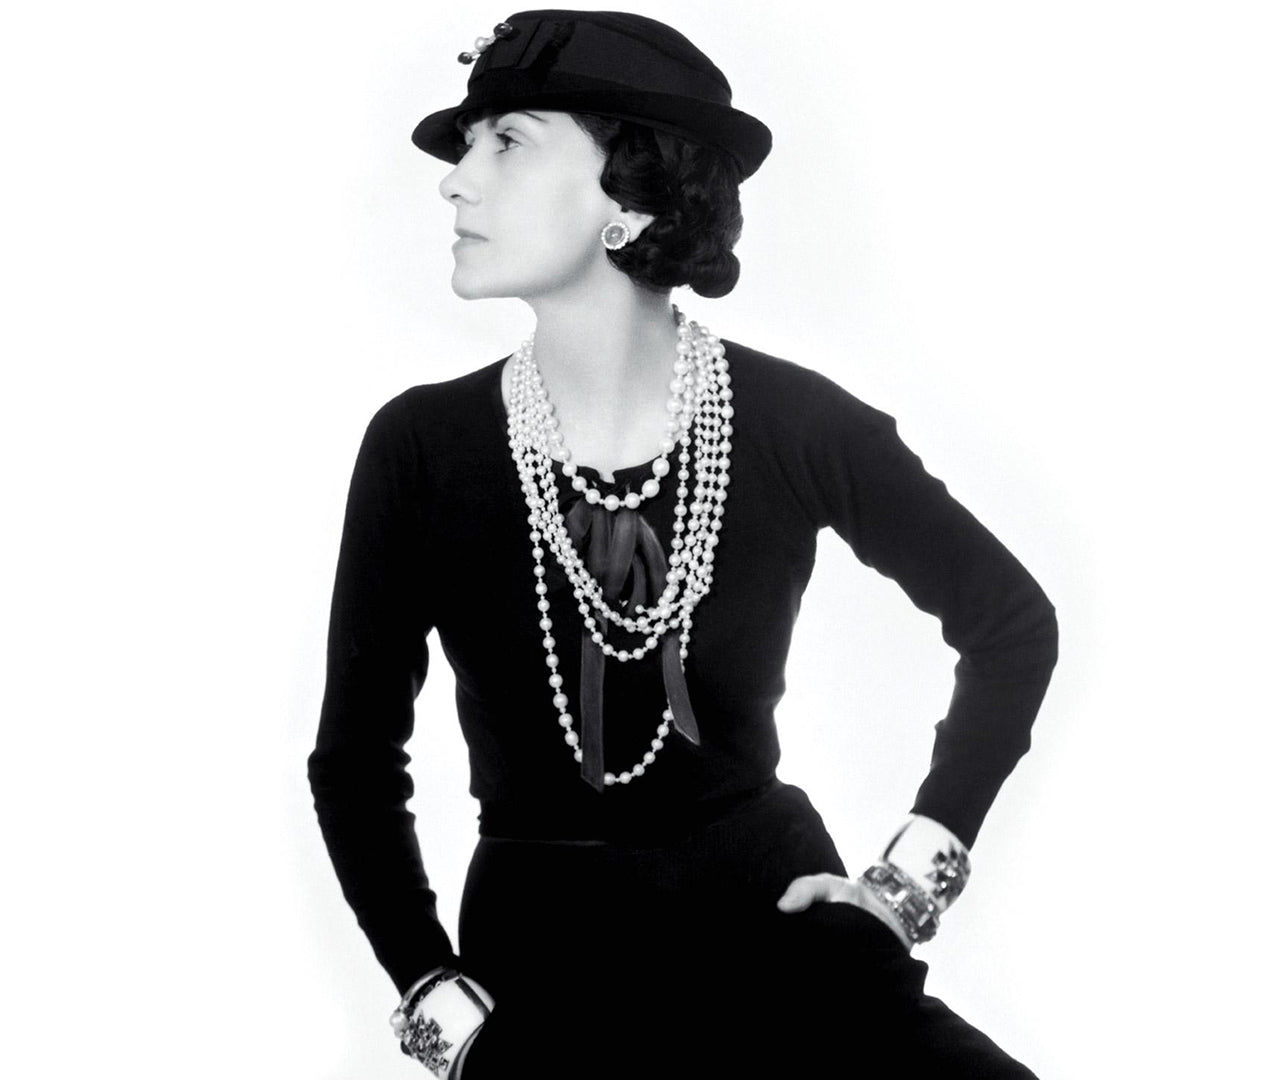 Coco Chanel — Chic Simplicity